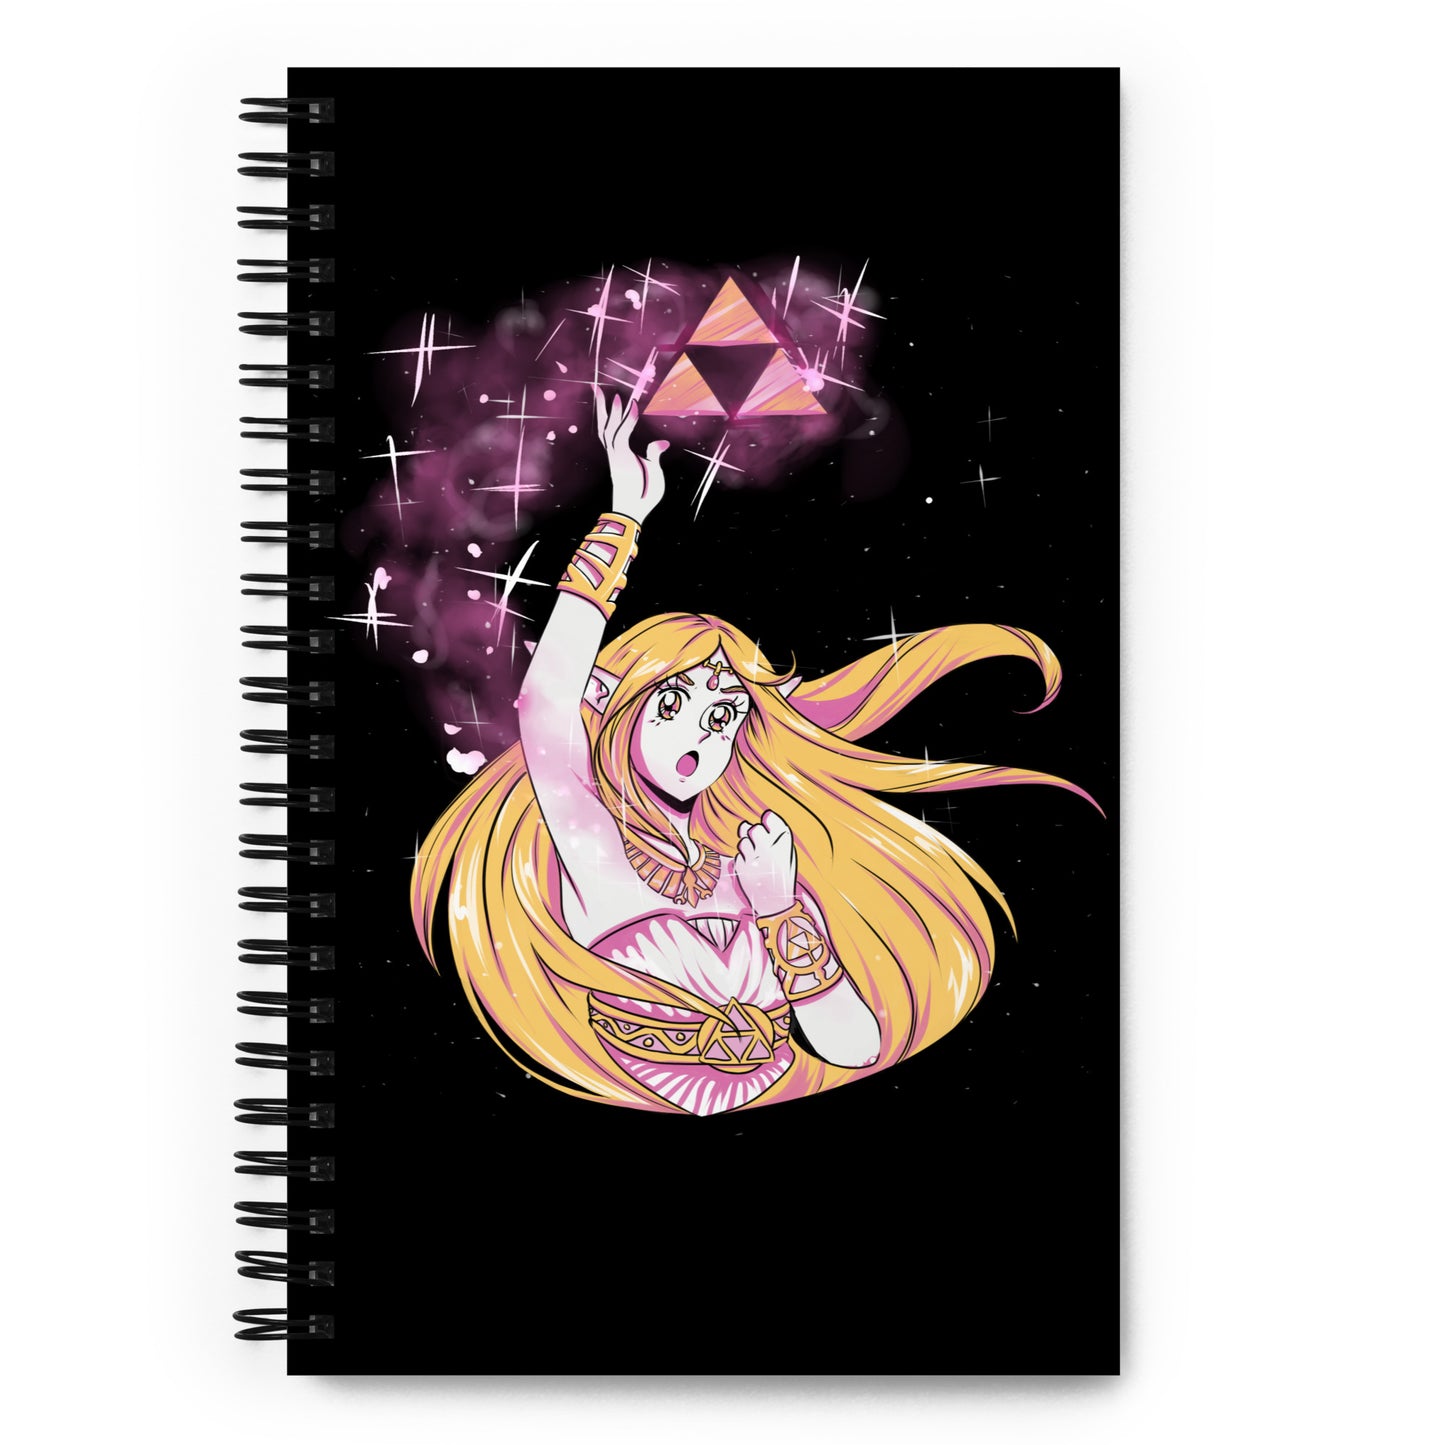 Zeldathon - Spiral Notebook - Sailor Zelda